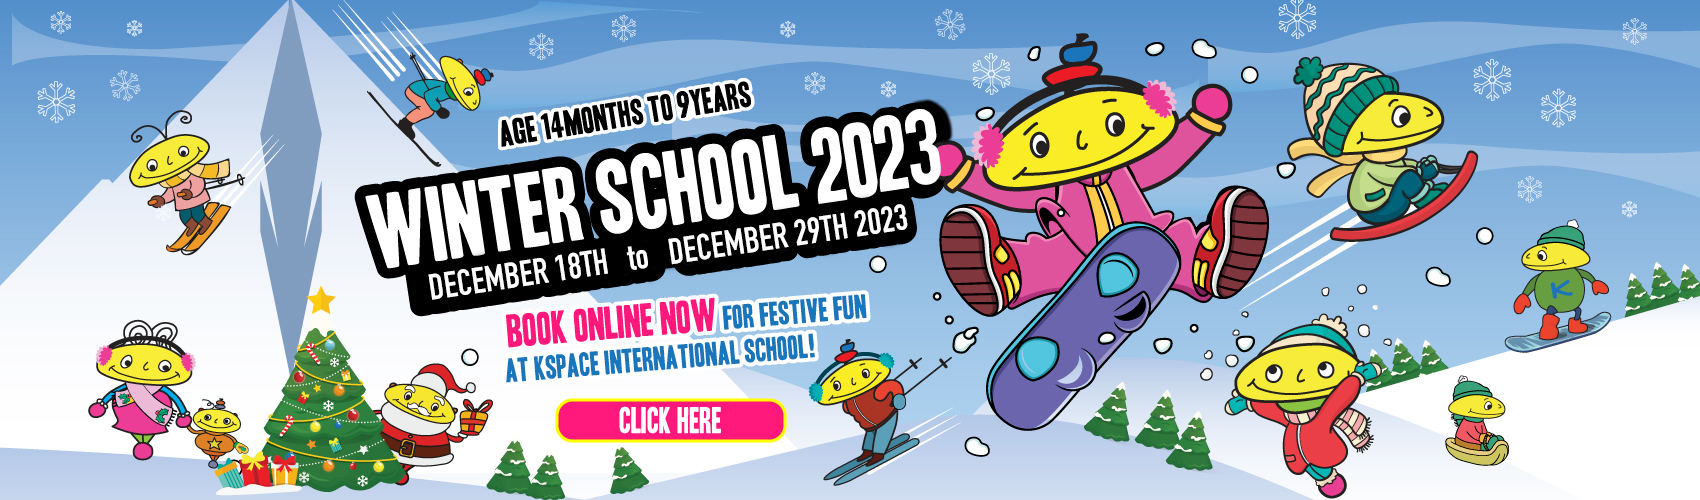 Kspace Winter School 2023